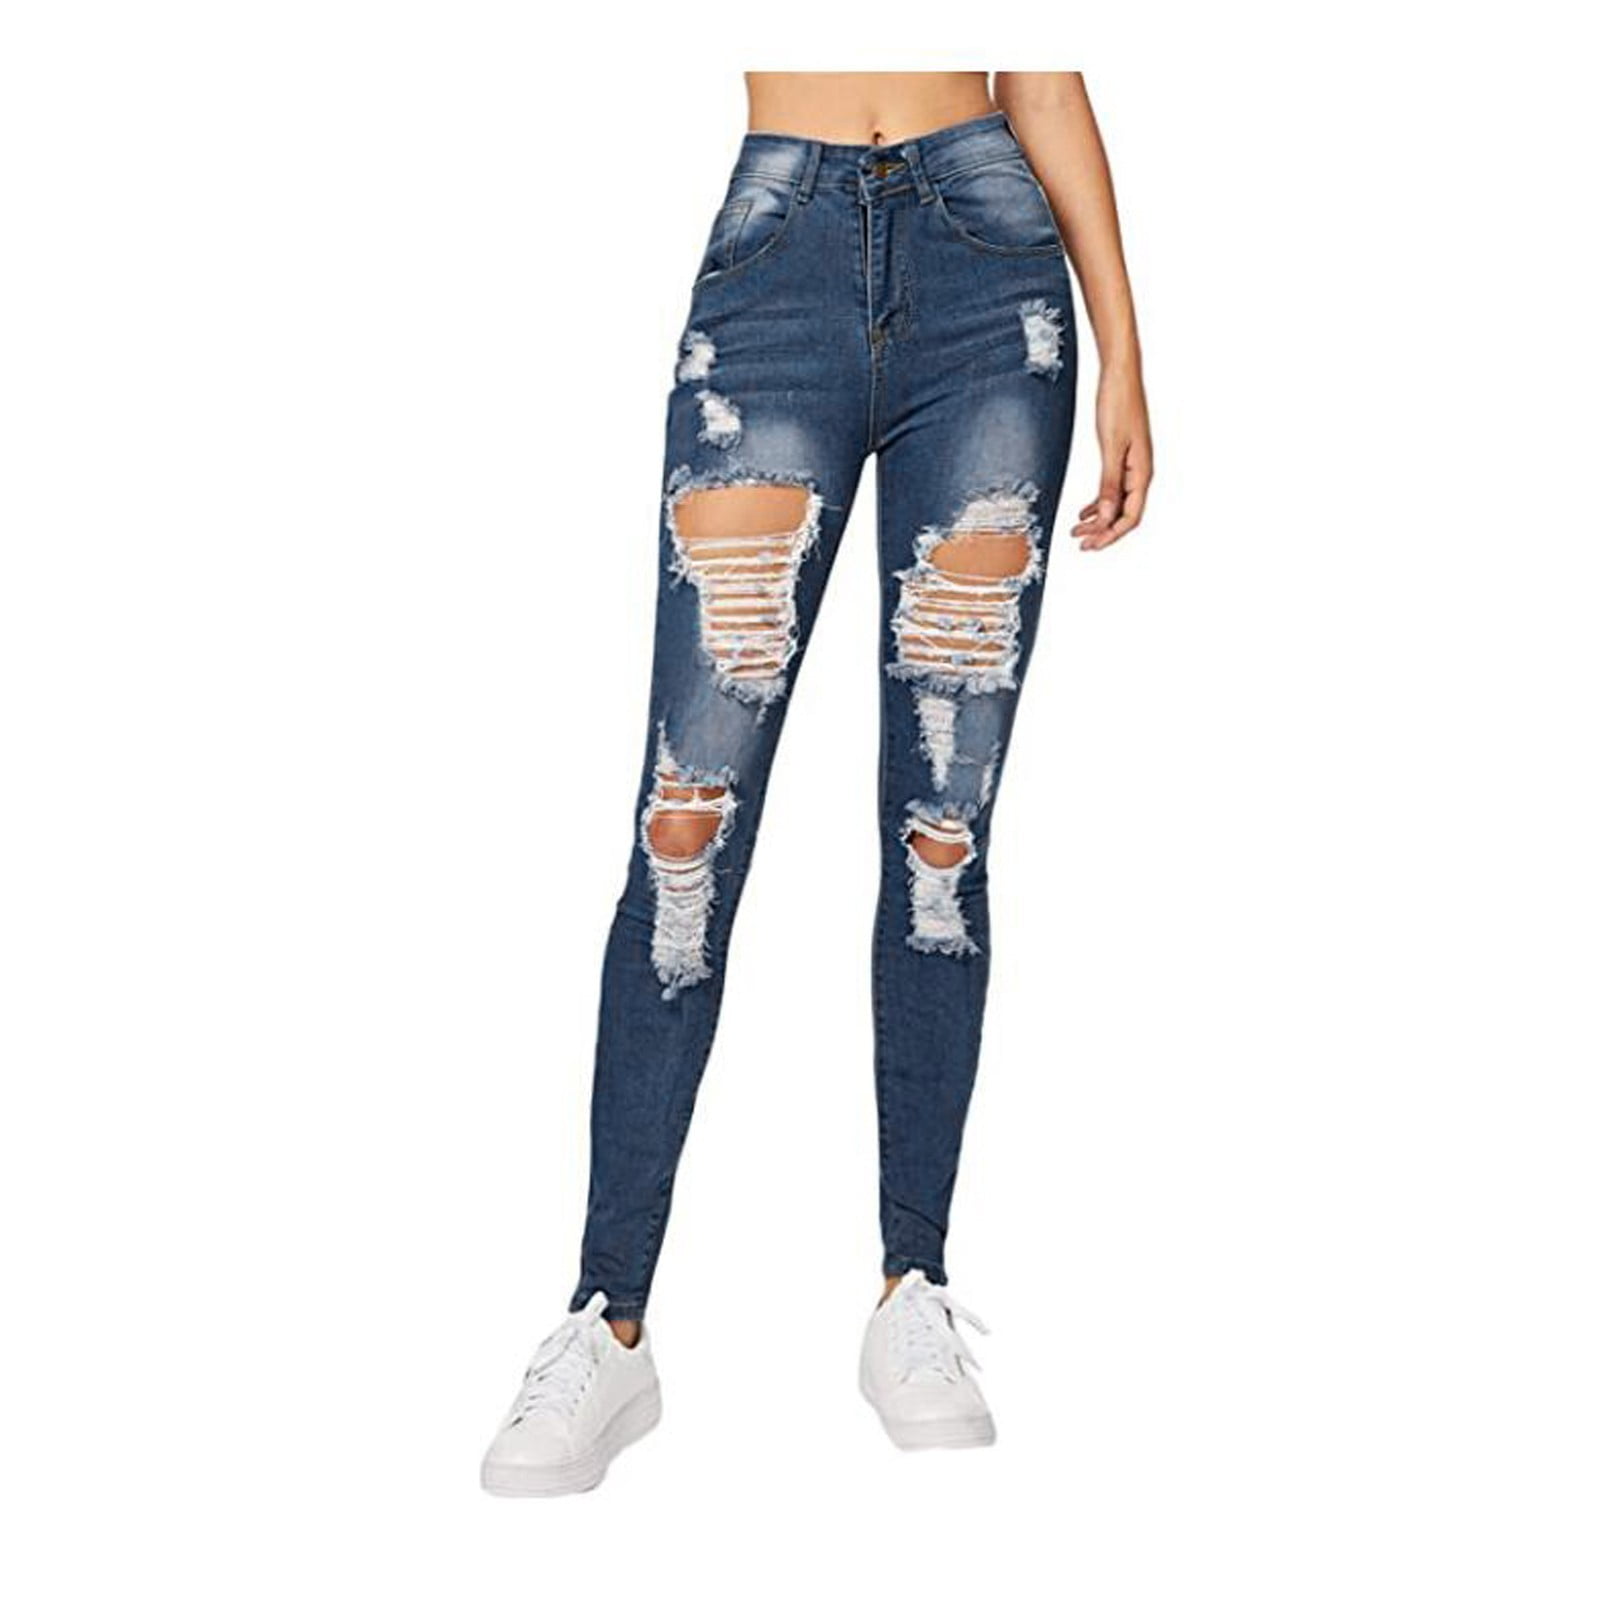 Young Woman Wearing Stylish Jeans Pants Stock Photo 1422995738 |  Shutterstock